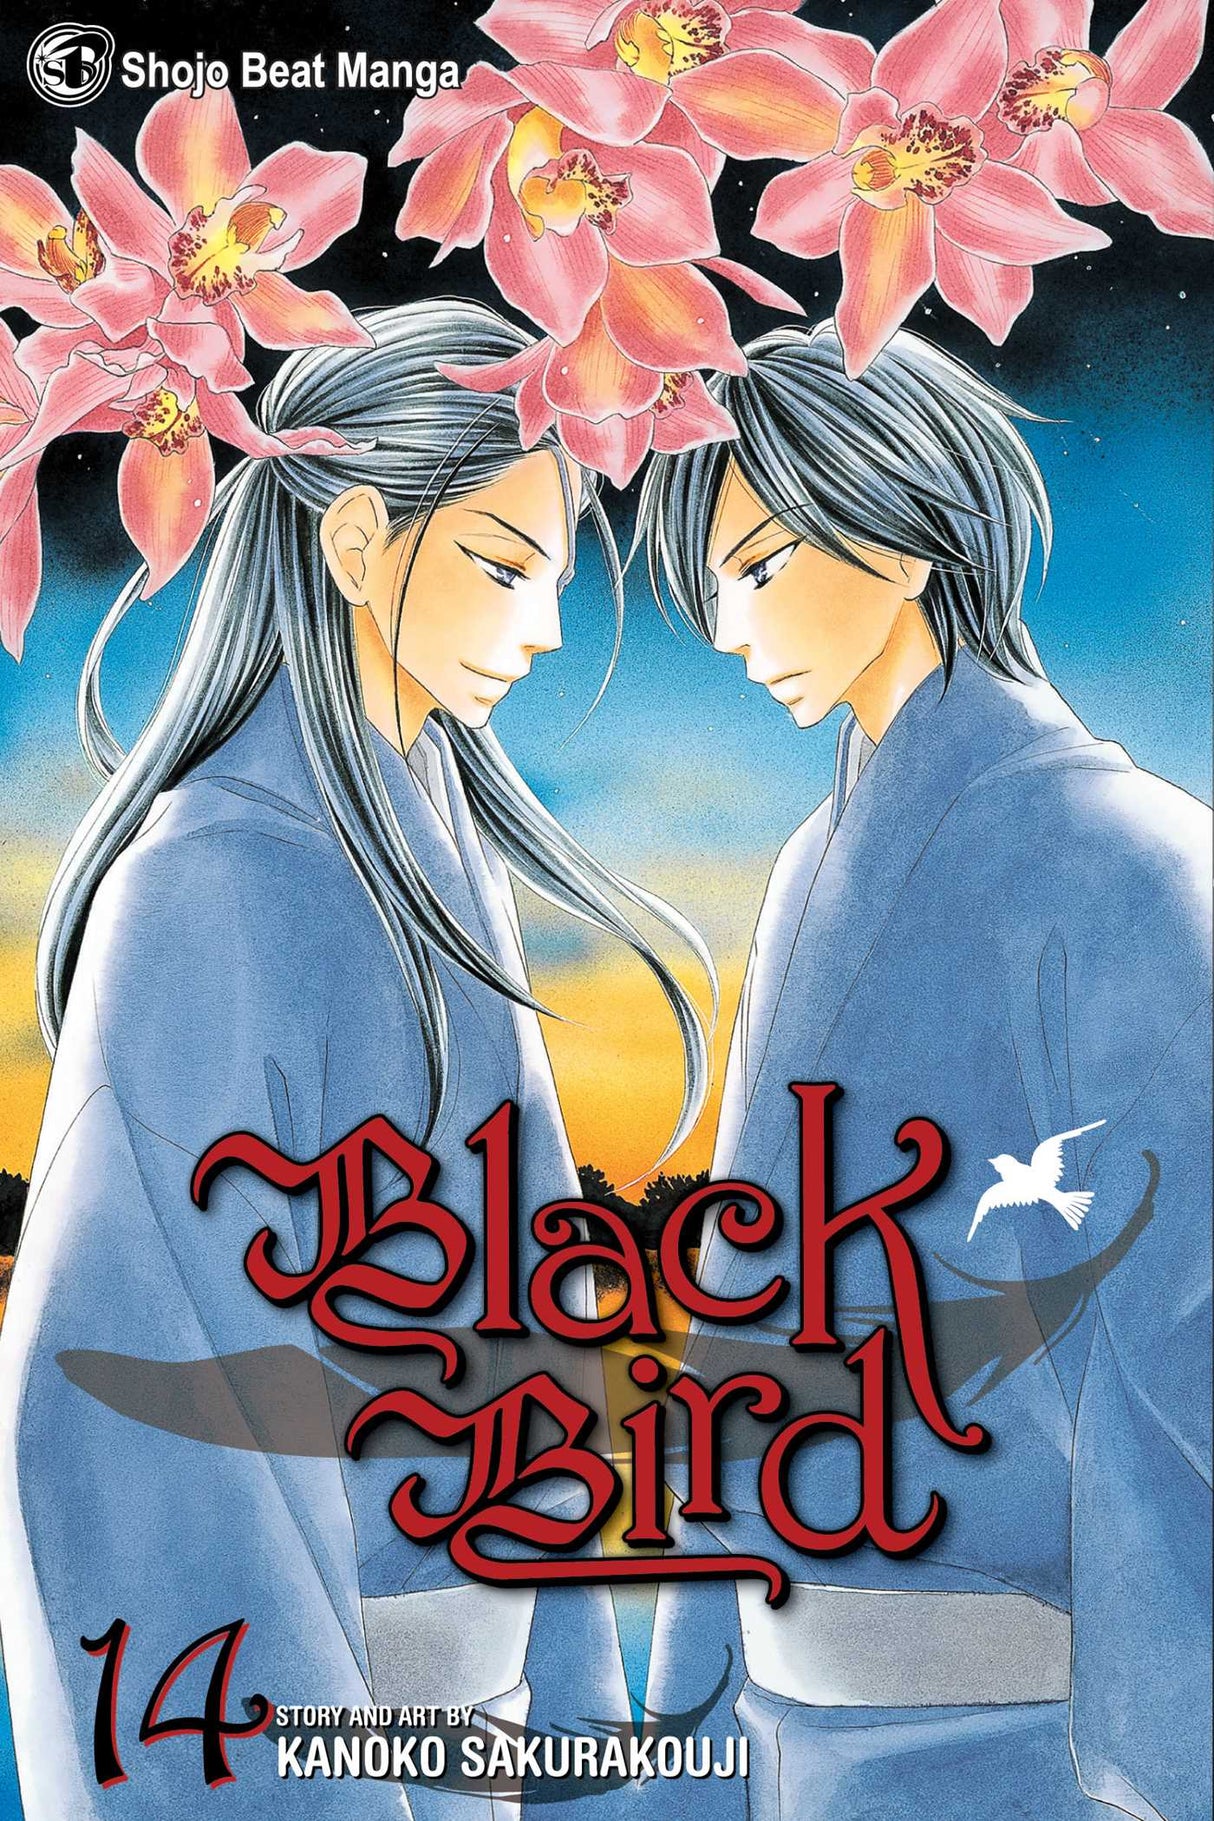 Cover image of the Manga Black-Bird-Vol-14